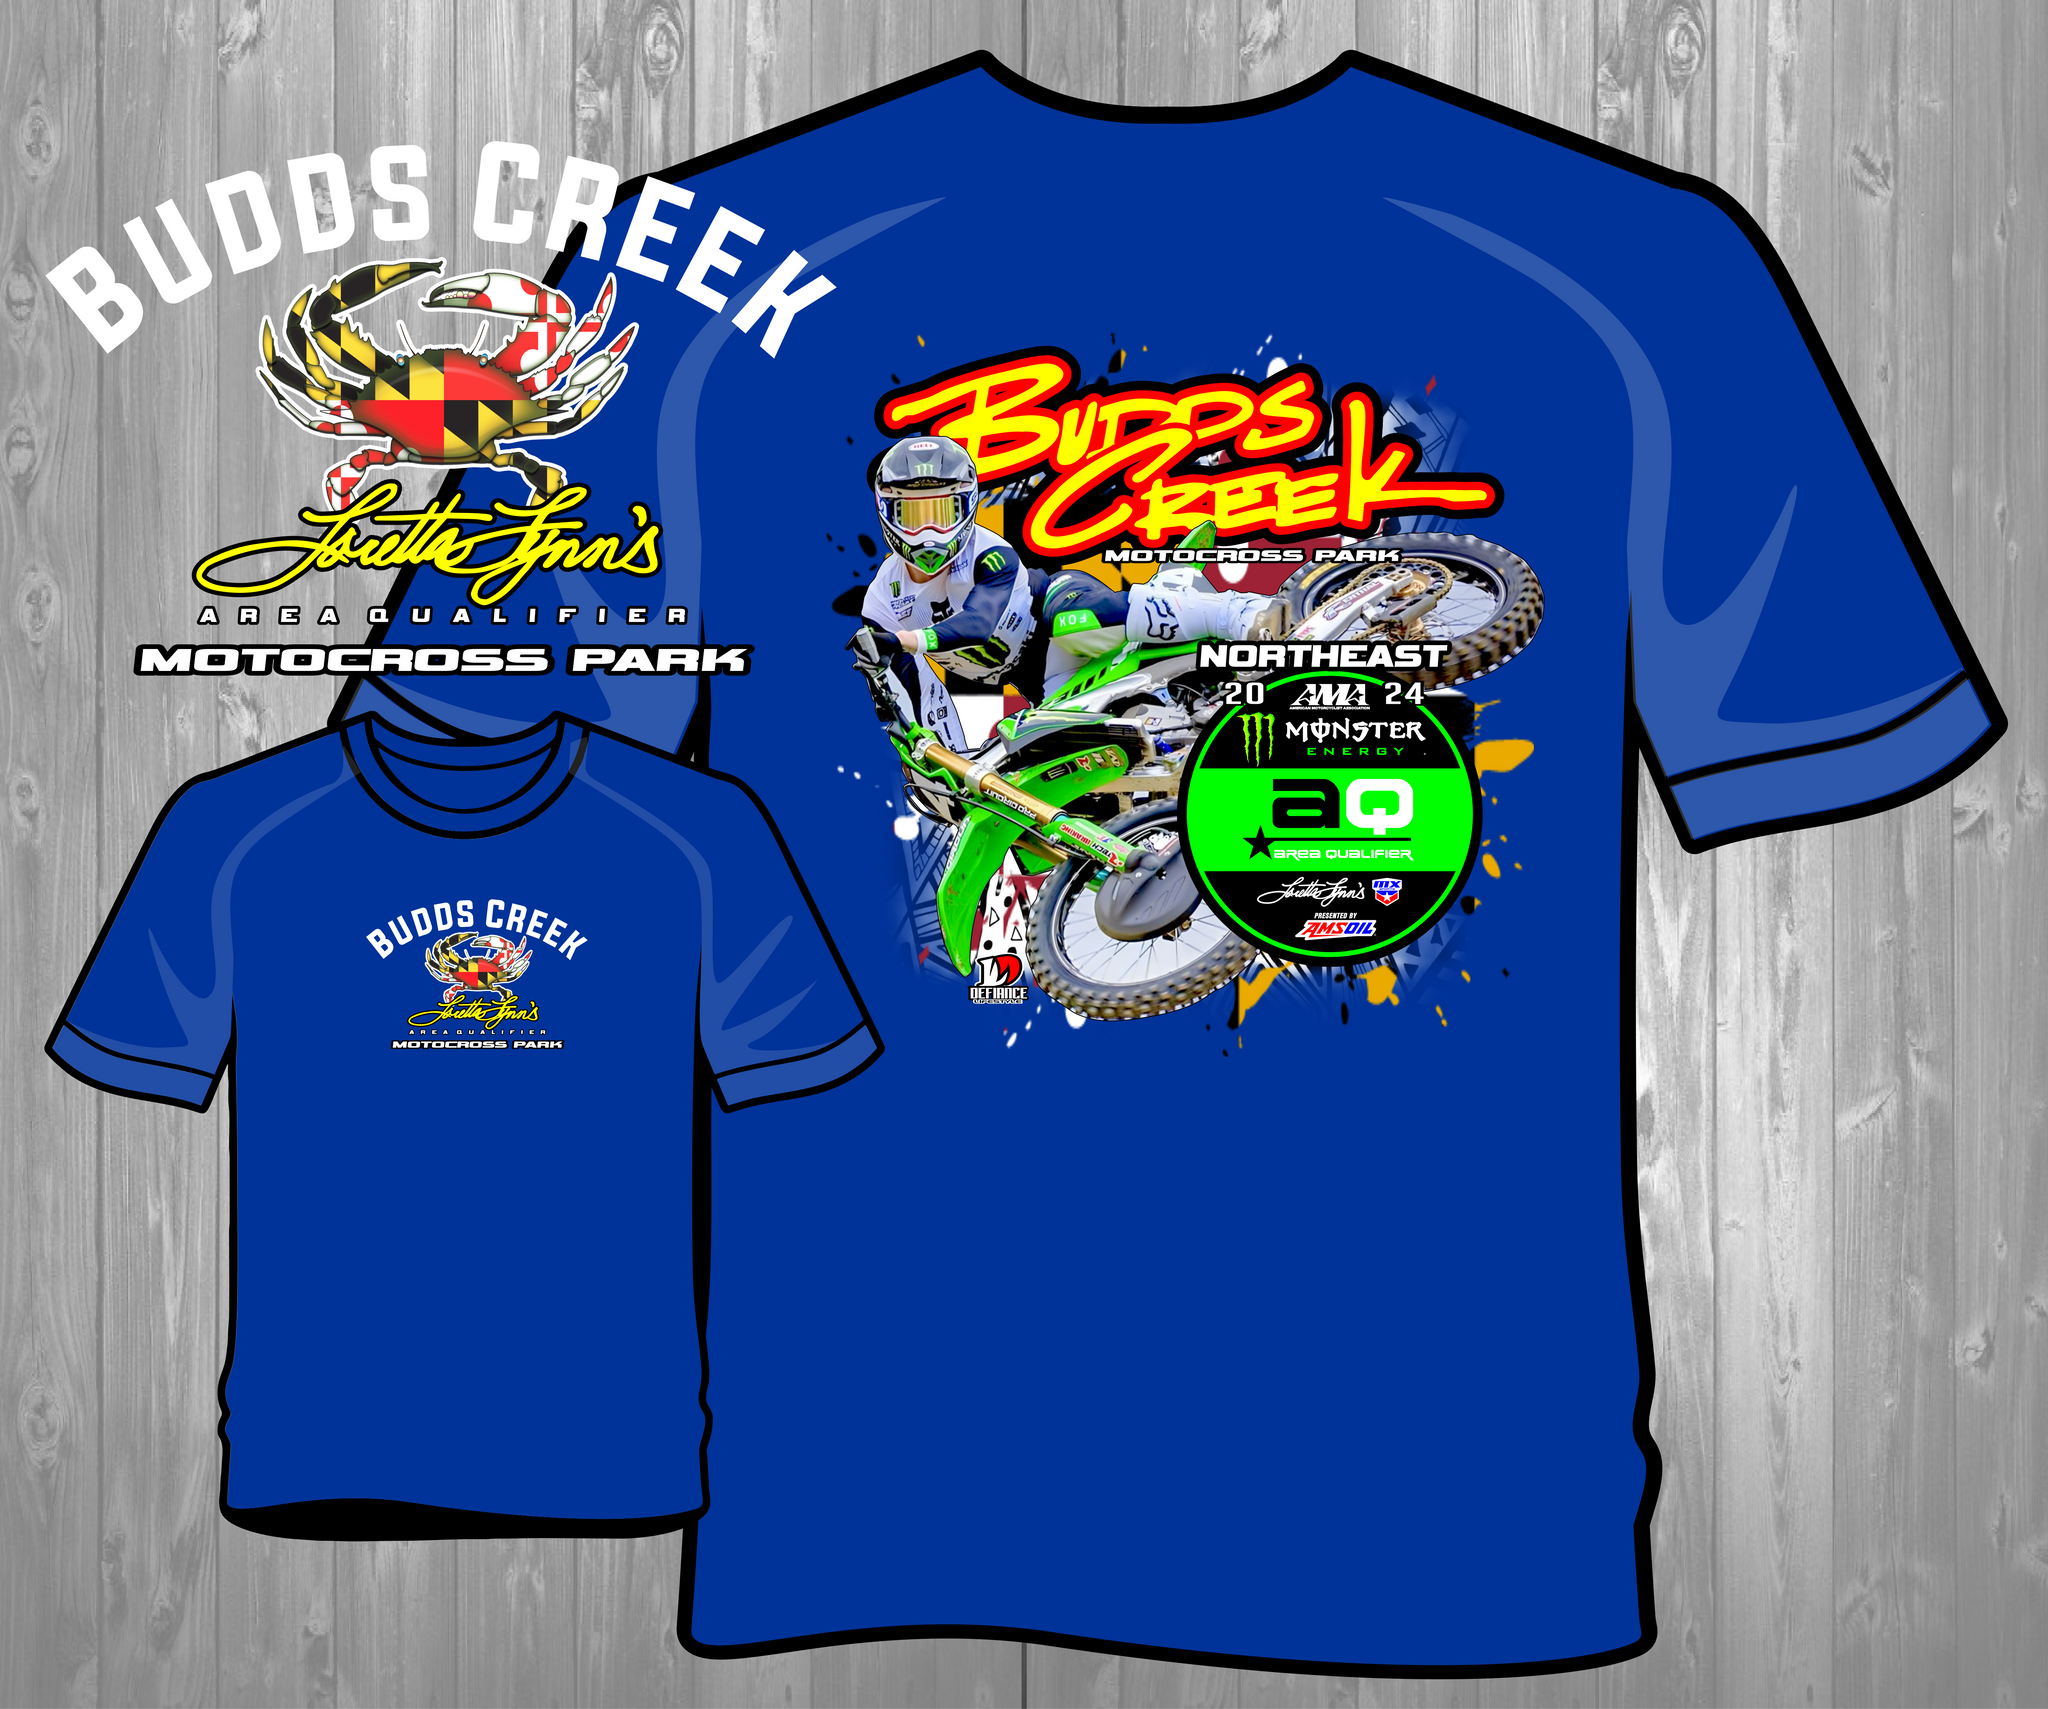 Budds Creek Qualifier 24